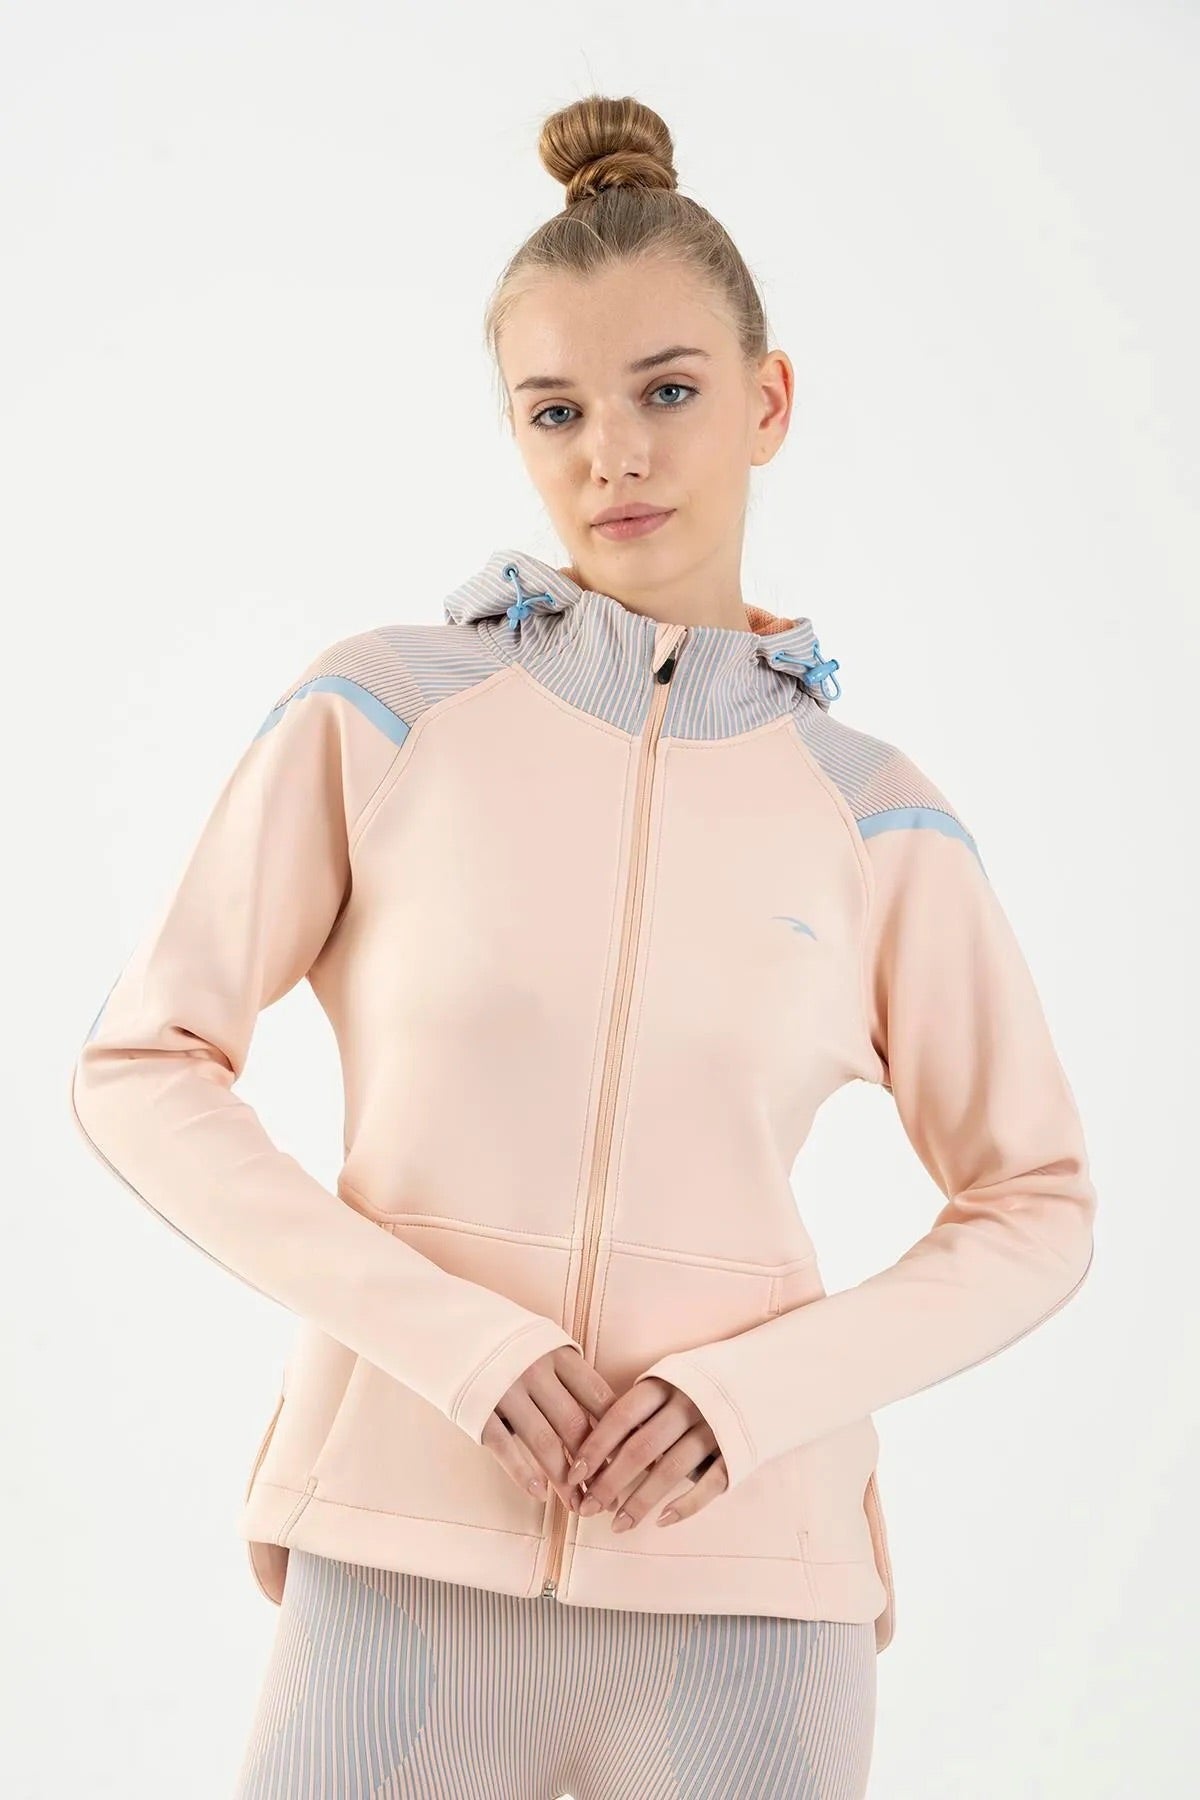 SlimFit Hooded Sports Jacket in Peach